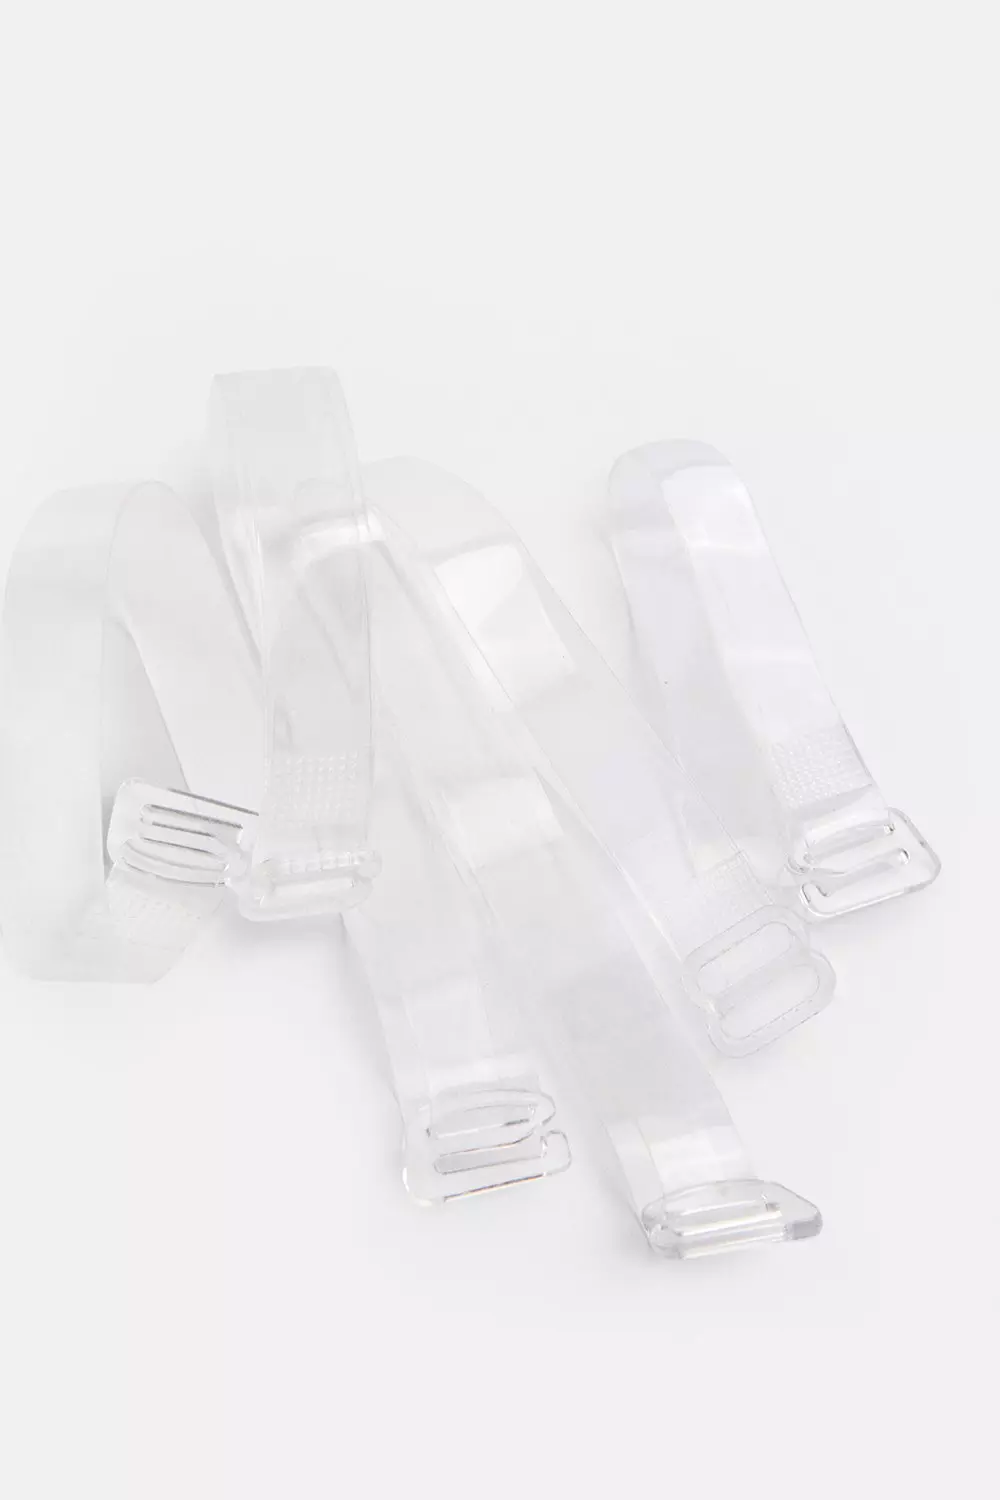 Clear Silicone Adjustable Bra Straps